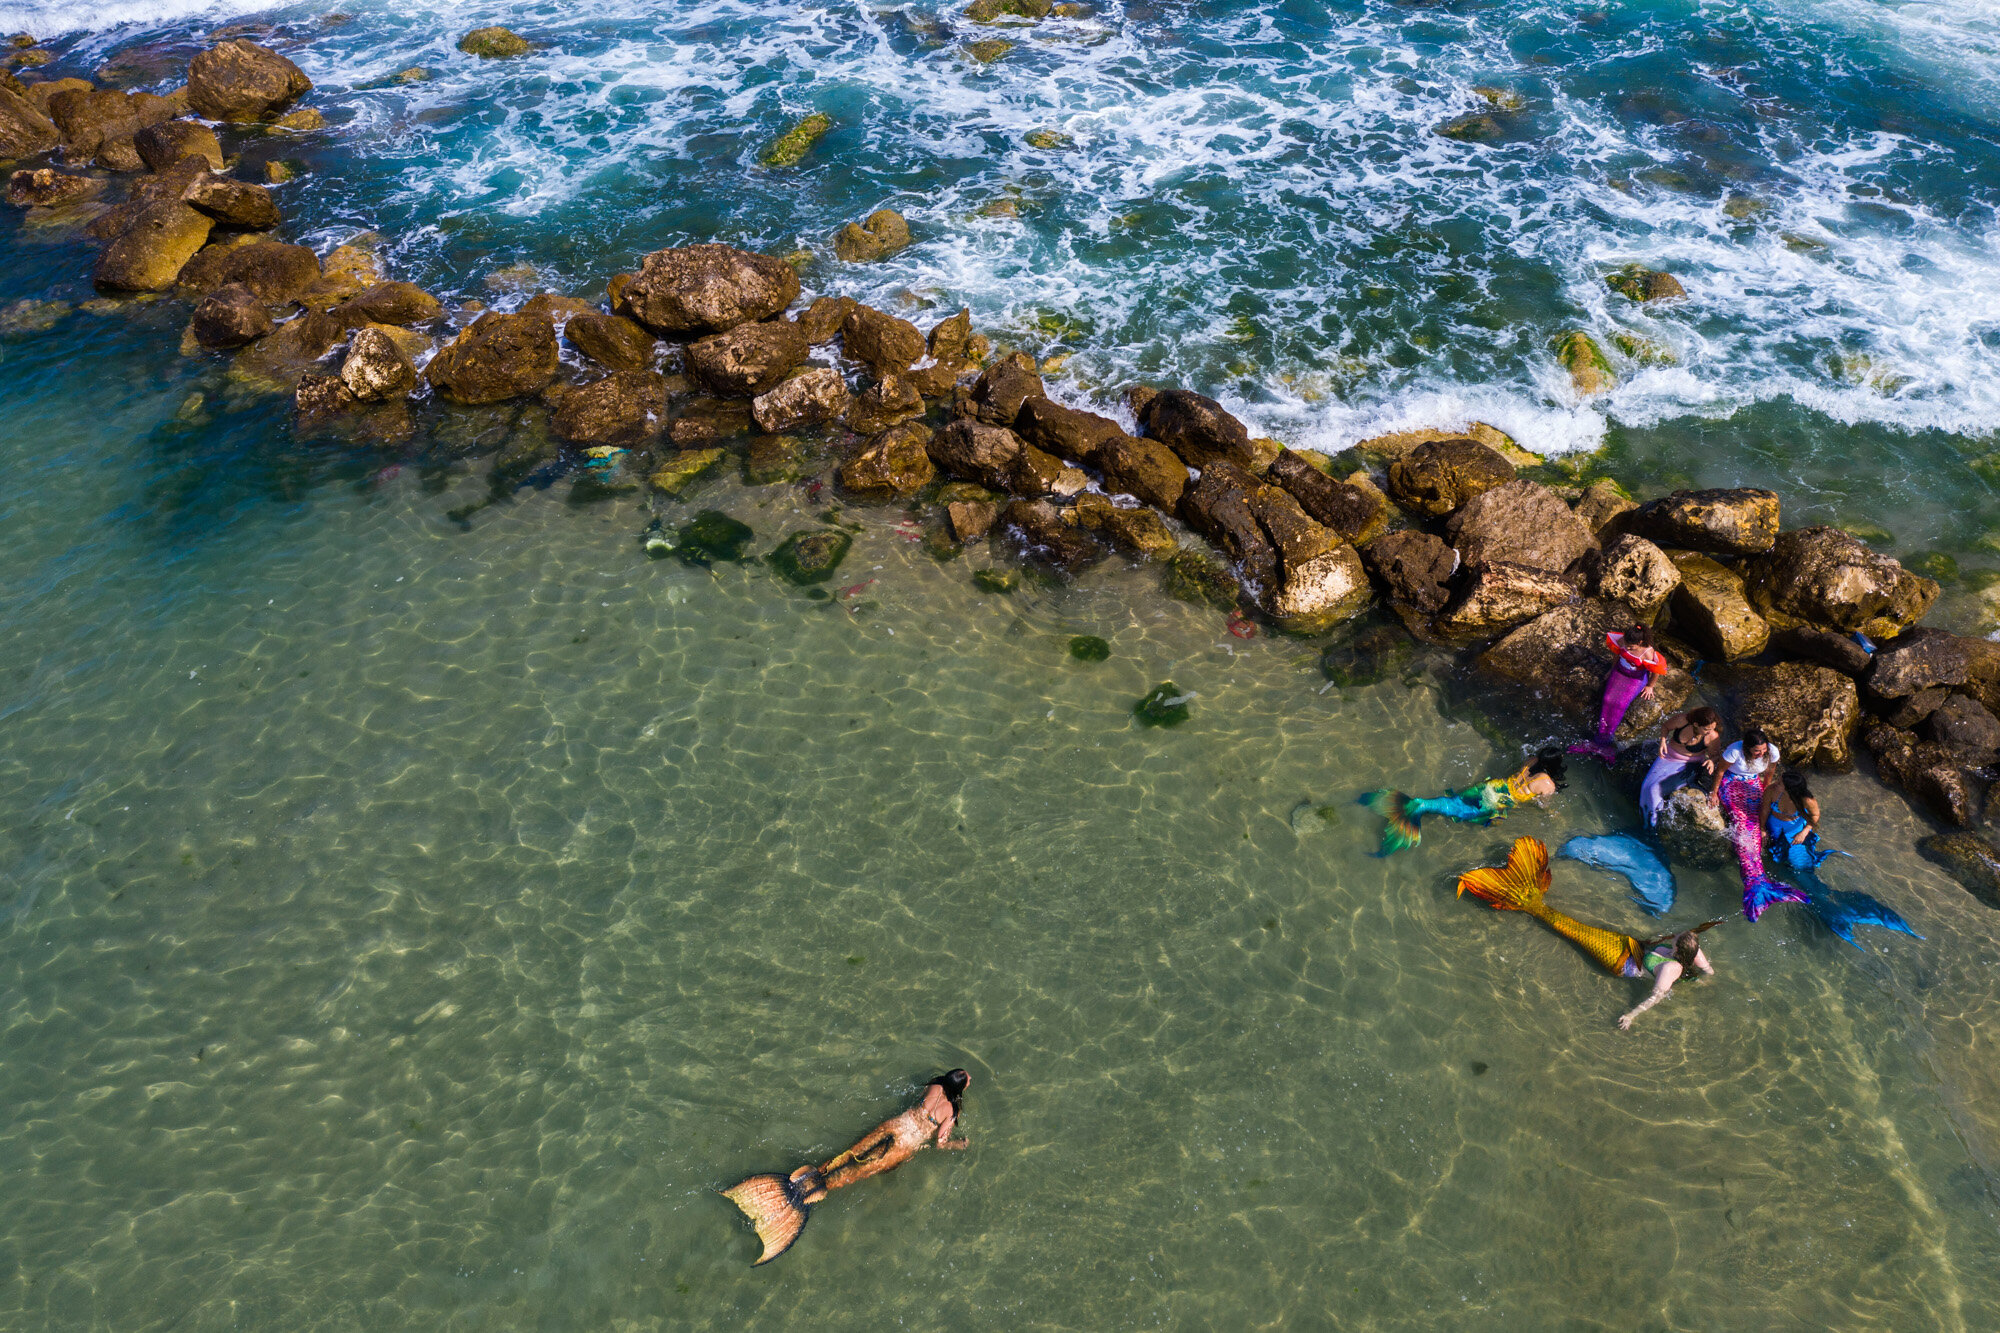  Members of the Israeli Mermaid Community swim with mermaid tails at the beachfront in Bat Yam, near Tel Aviv, Israel, on May 23, 2020. (AP Photo/Oded Balilty) 